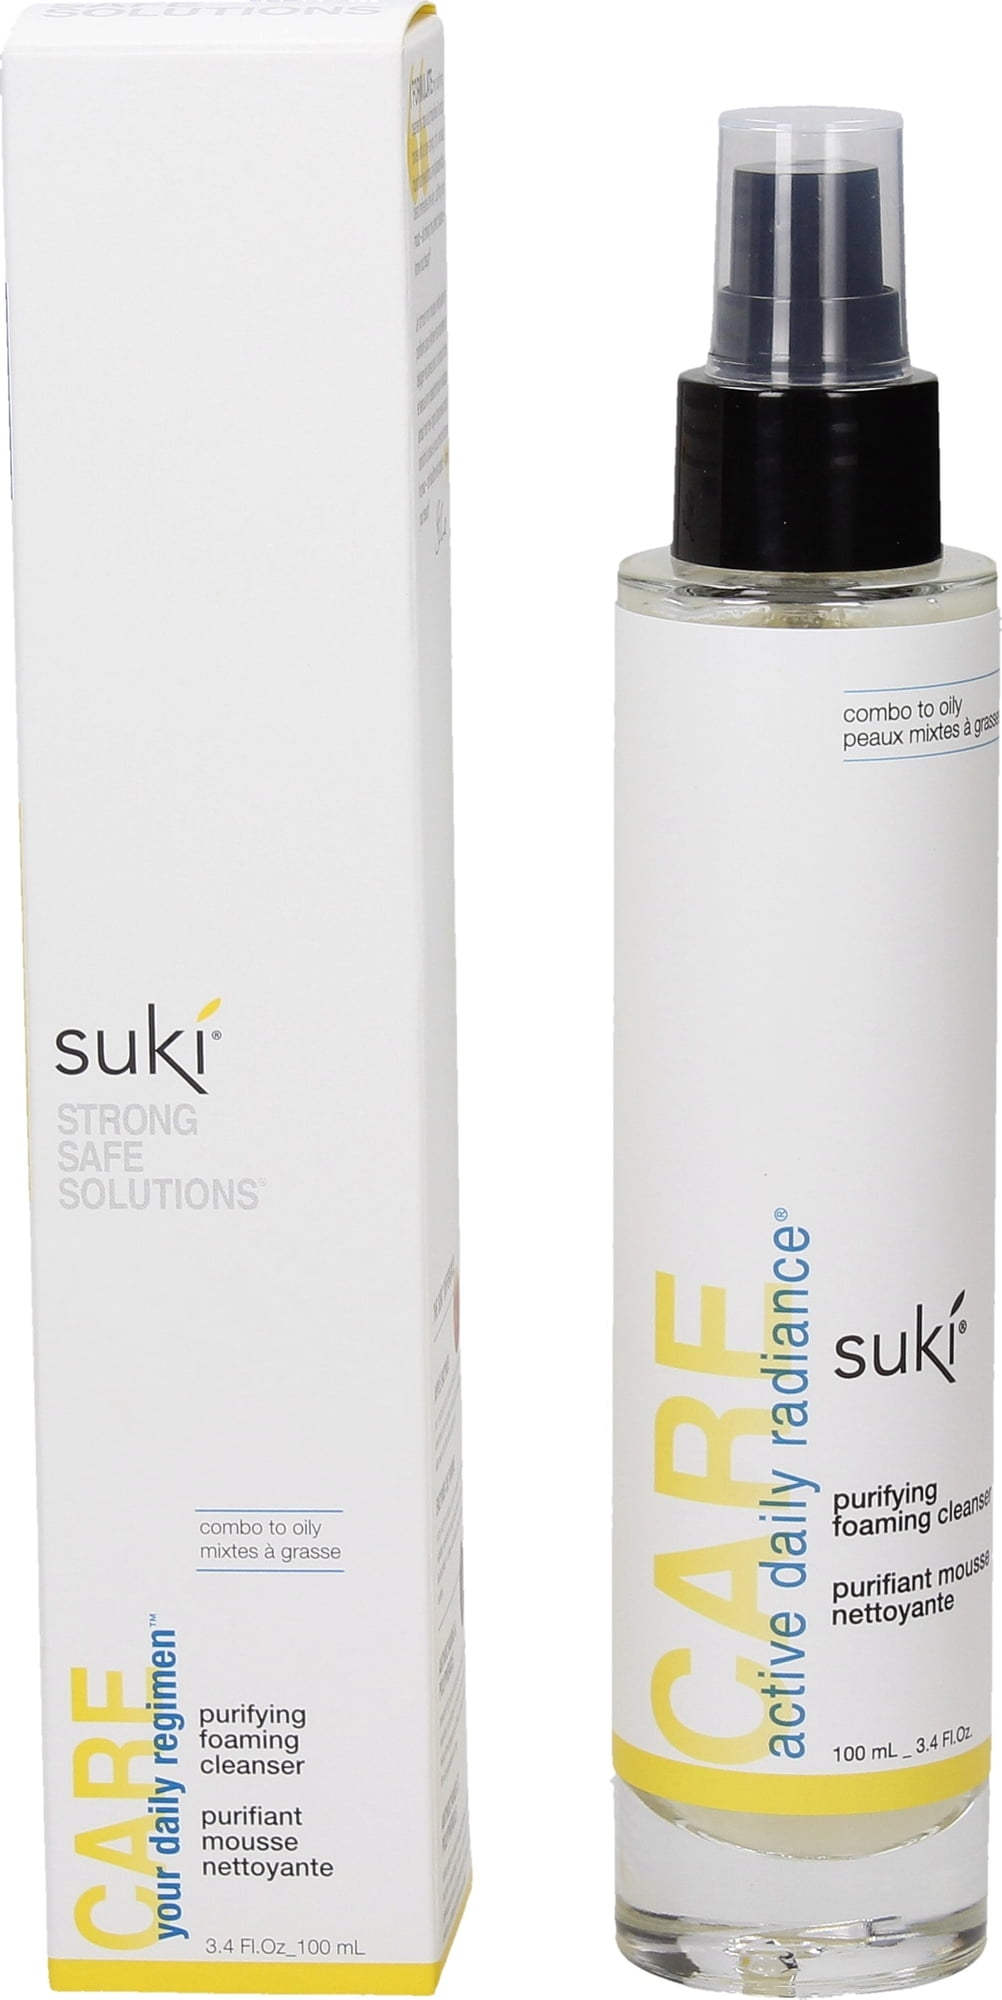 Suki Skincare purifying foaming cleanser